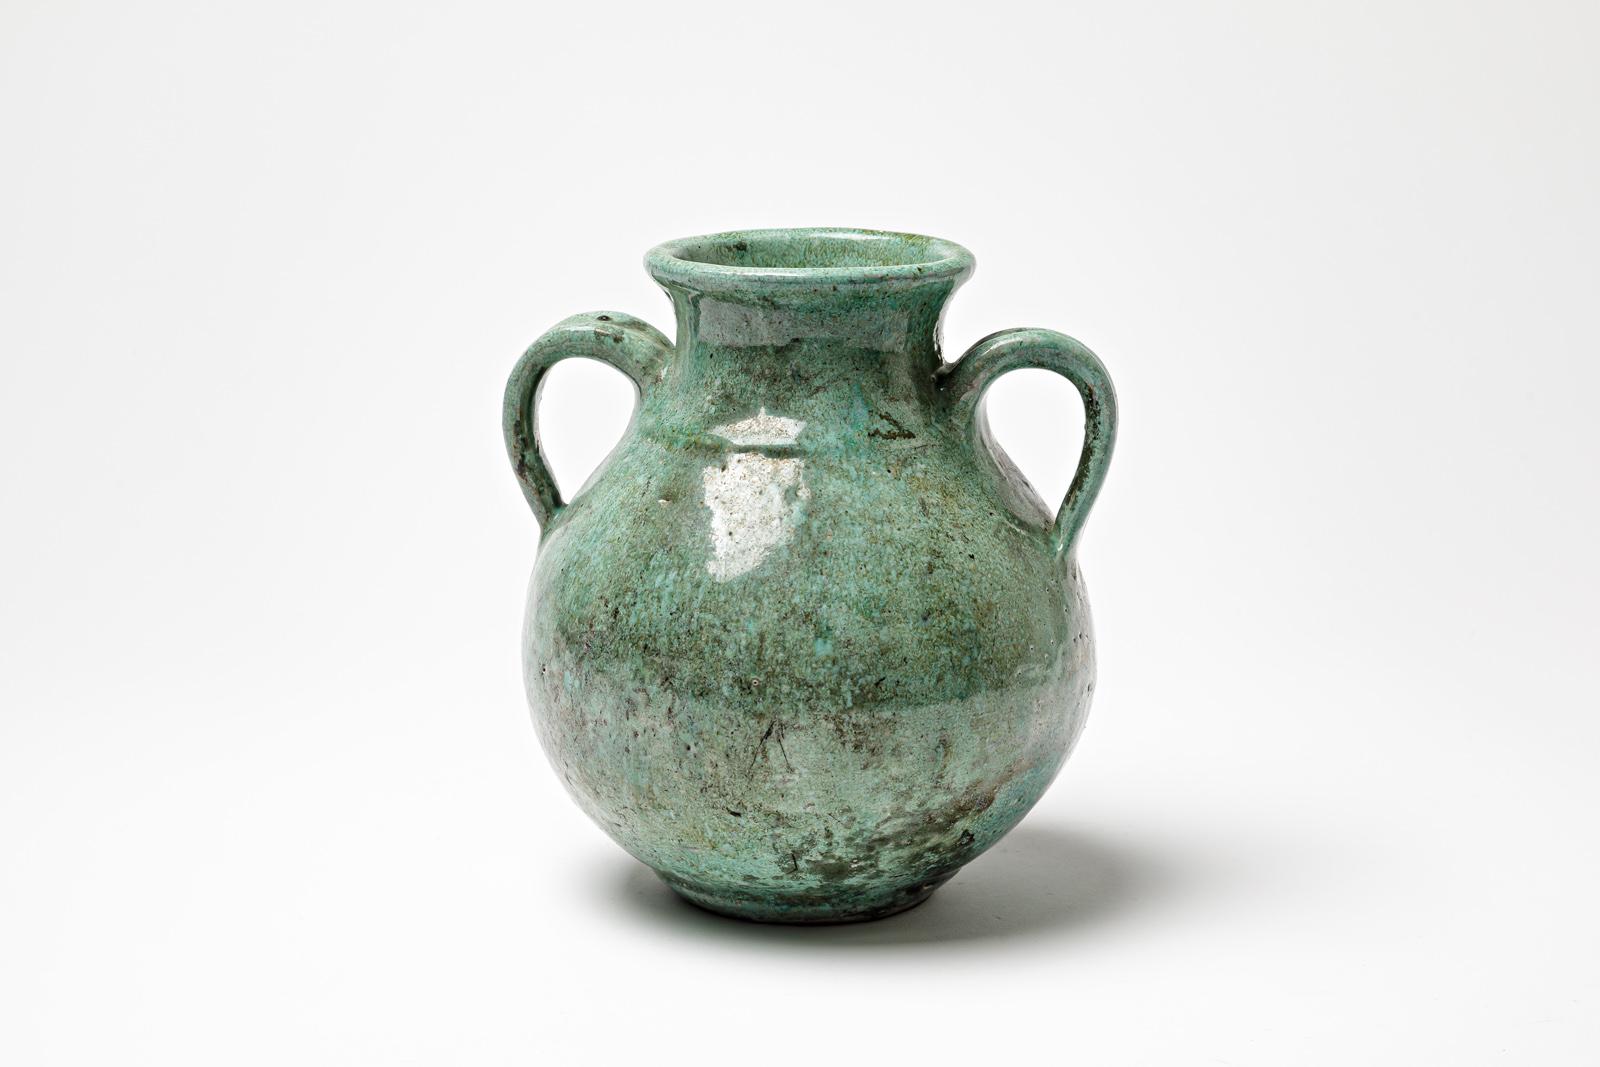 Green glazed ceramic handle pot by Gisèle Buthod Garçon. 
Raku fired. Artist monogram under the base. Circa 1980-1990. 
H : 6.7’ x 6.3’ x 4.7’ inches.